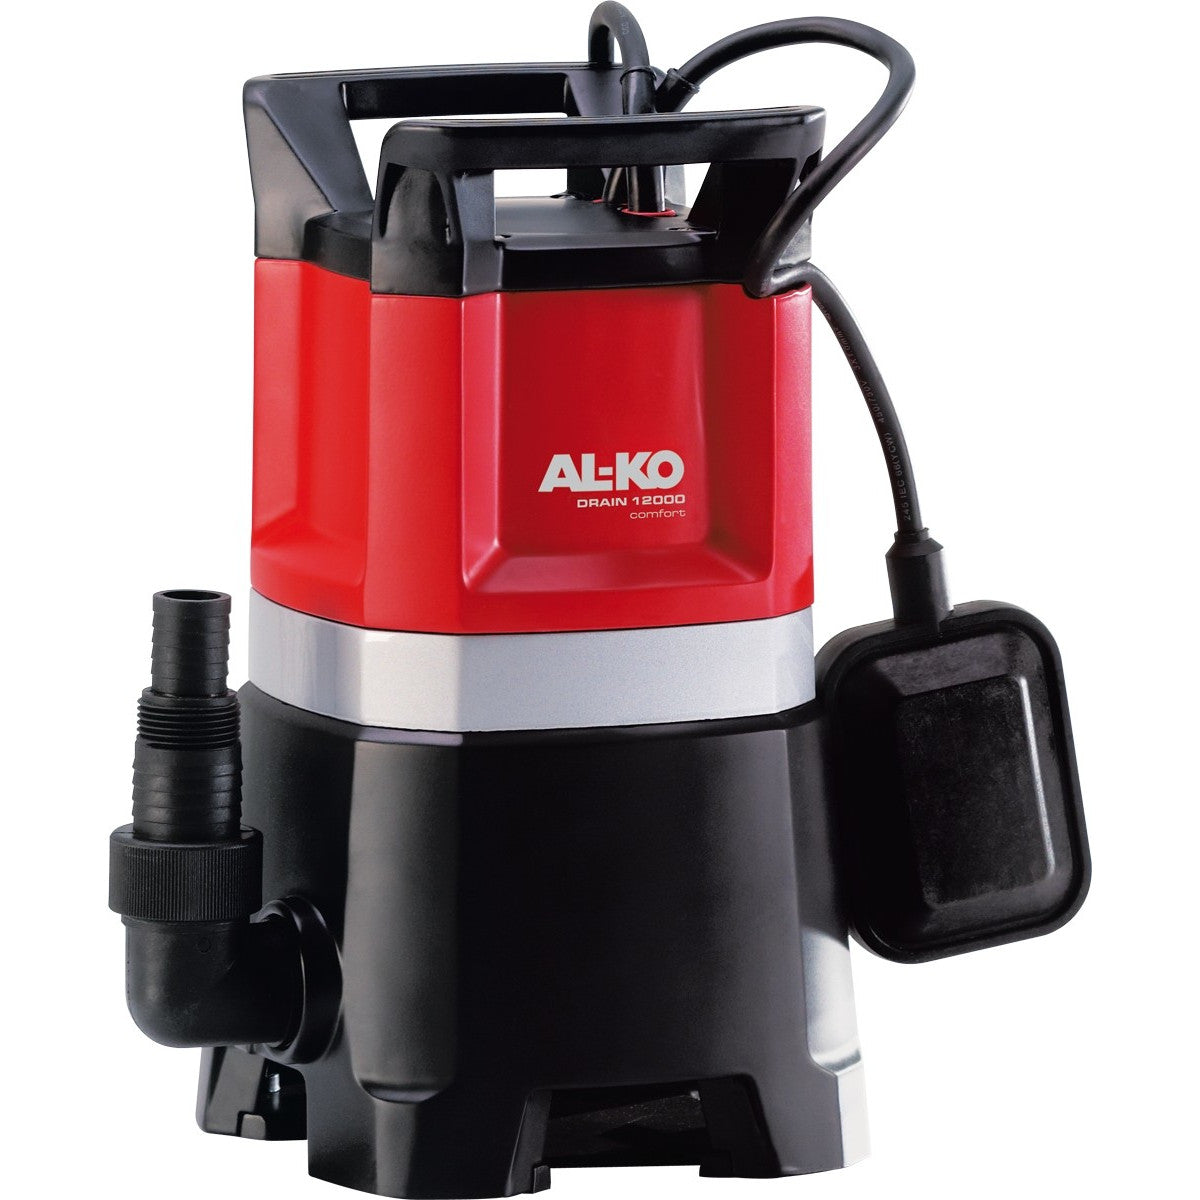 AL-KO szennyvízszivattyú Drain12000 Comfort 850 W,12000 l/h-0